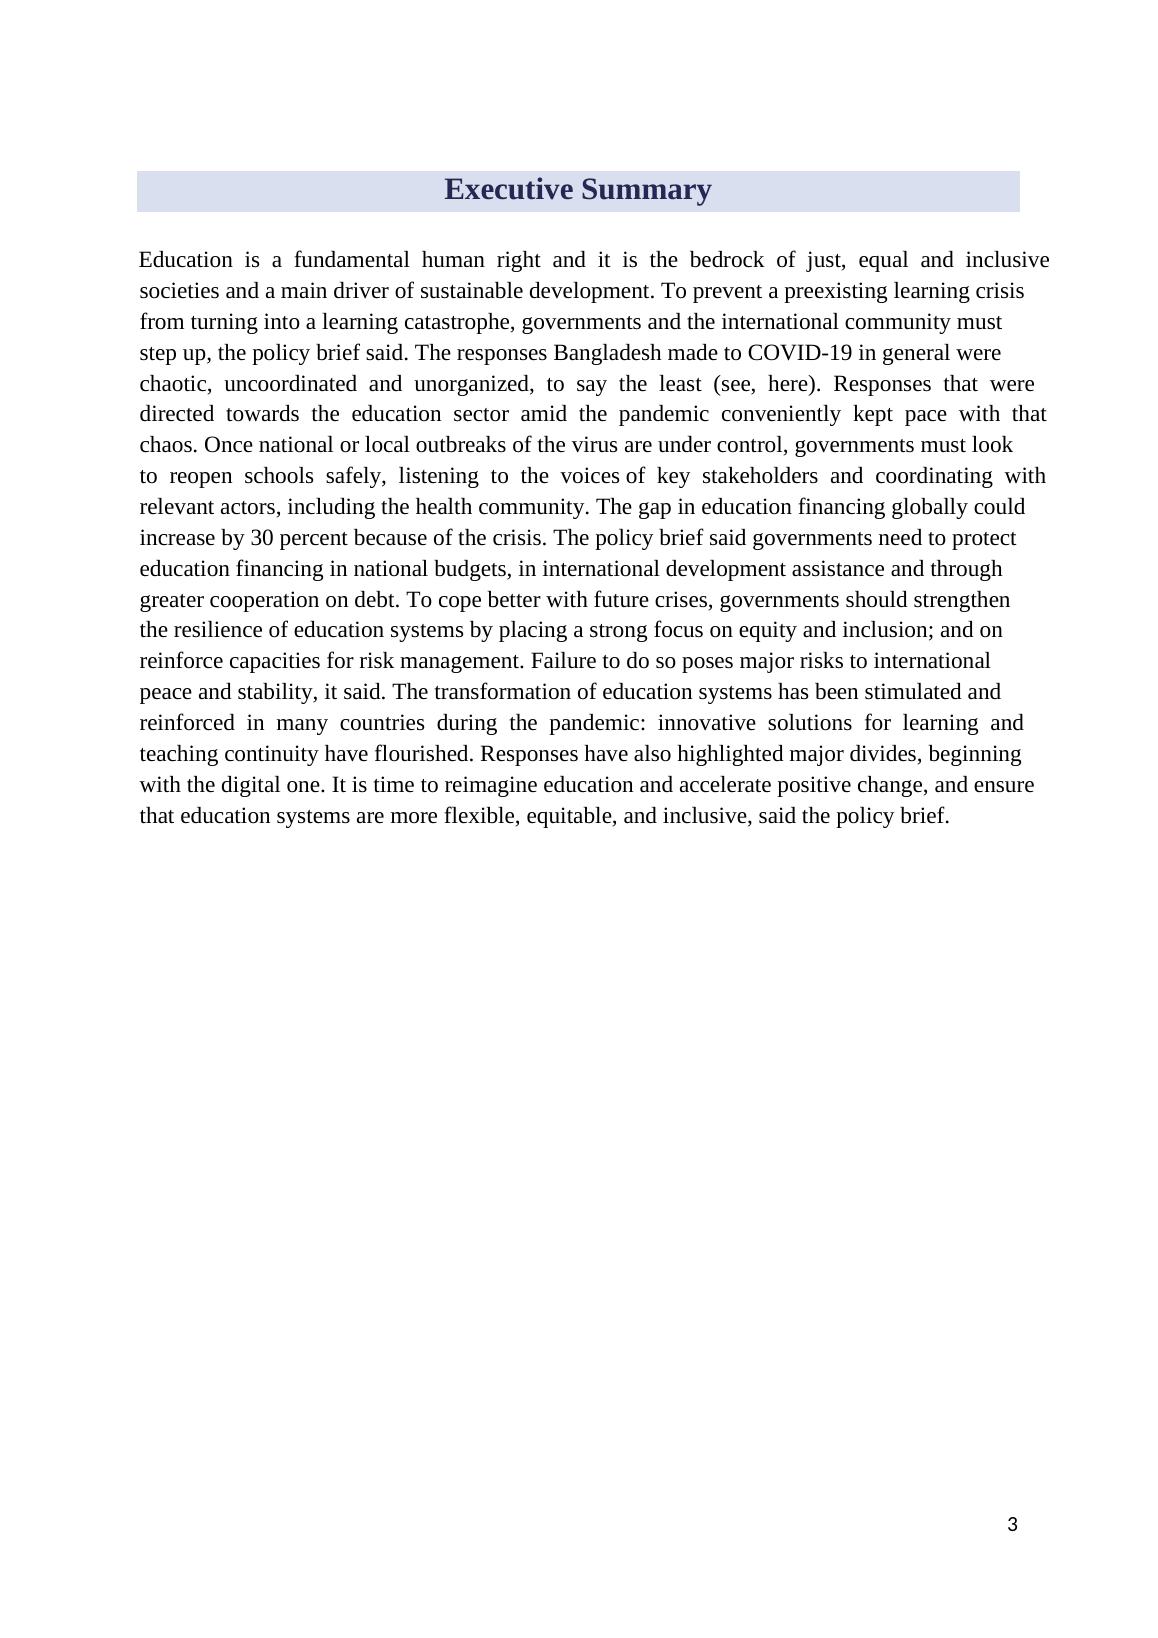 Impact of Covid-19 on Education - Bangladesh case study_3